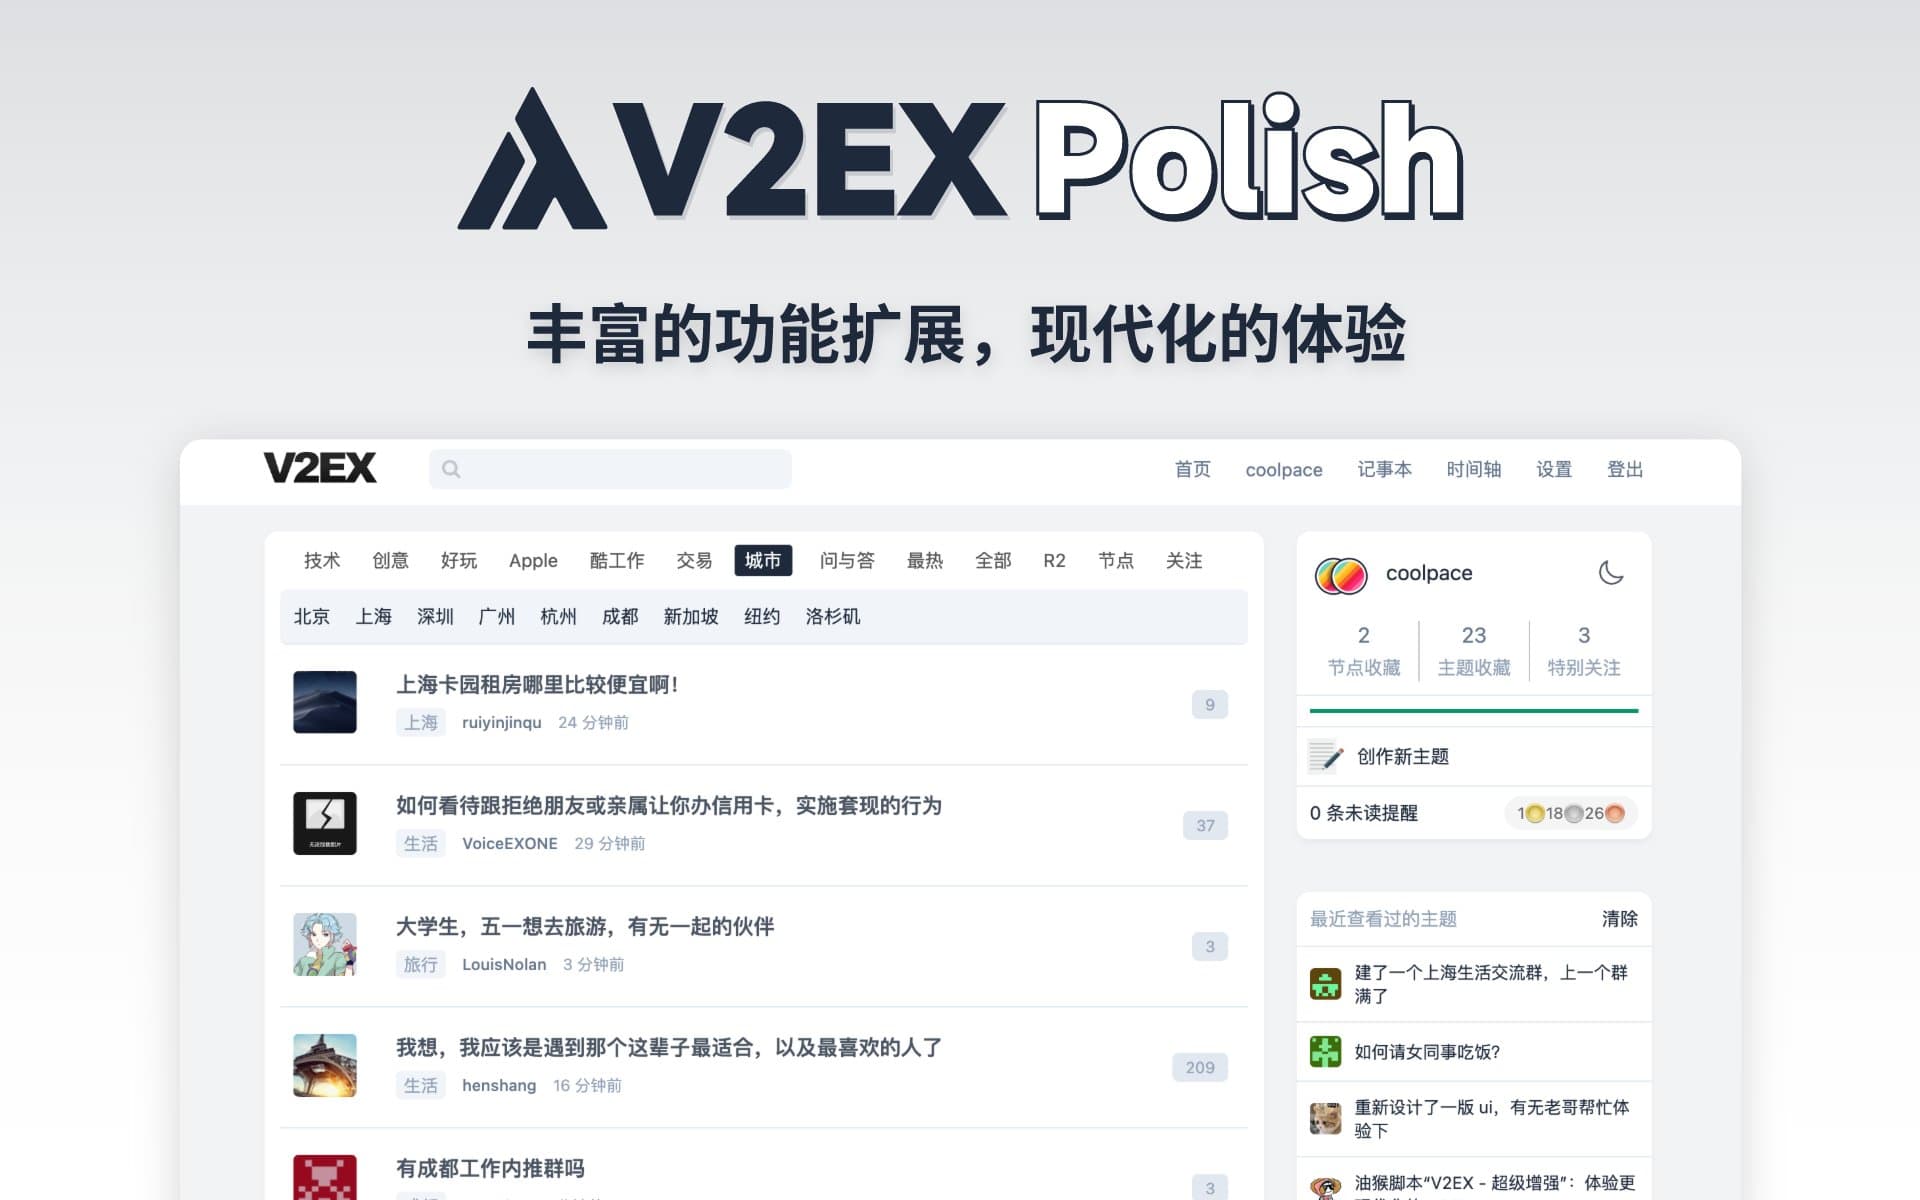 V2EX Polish 宣传封面图